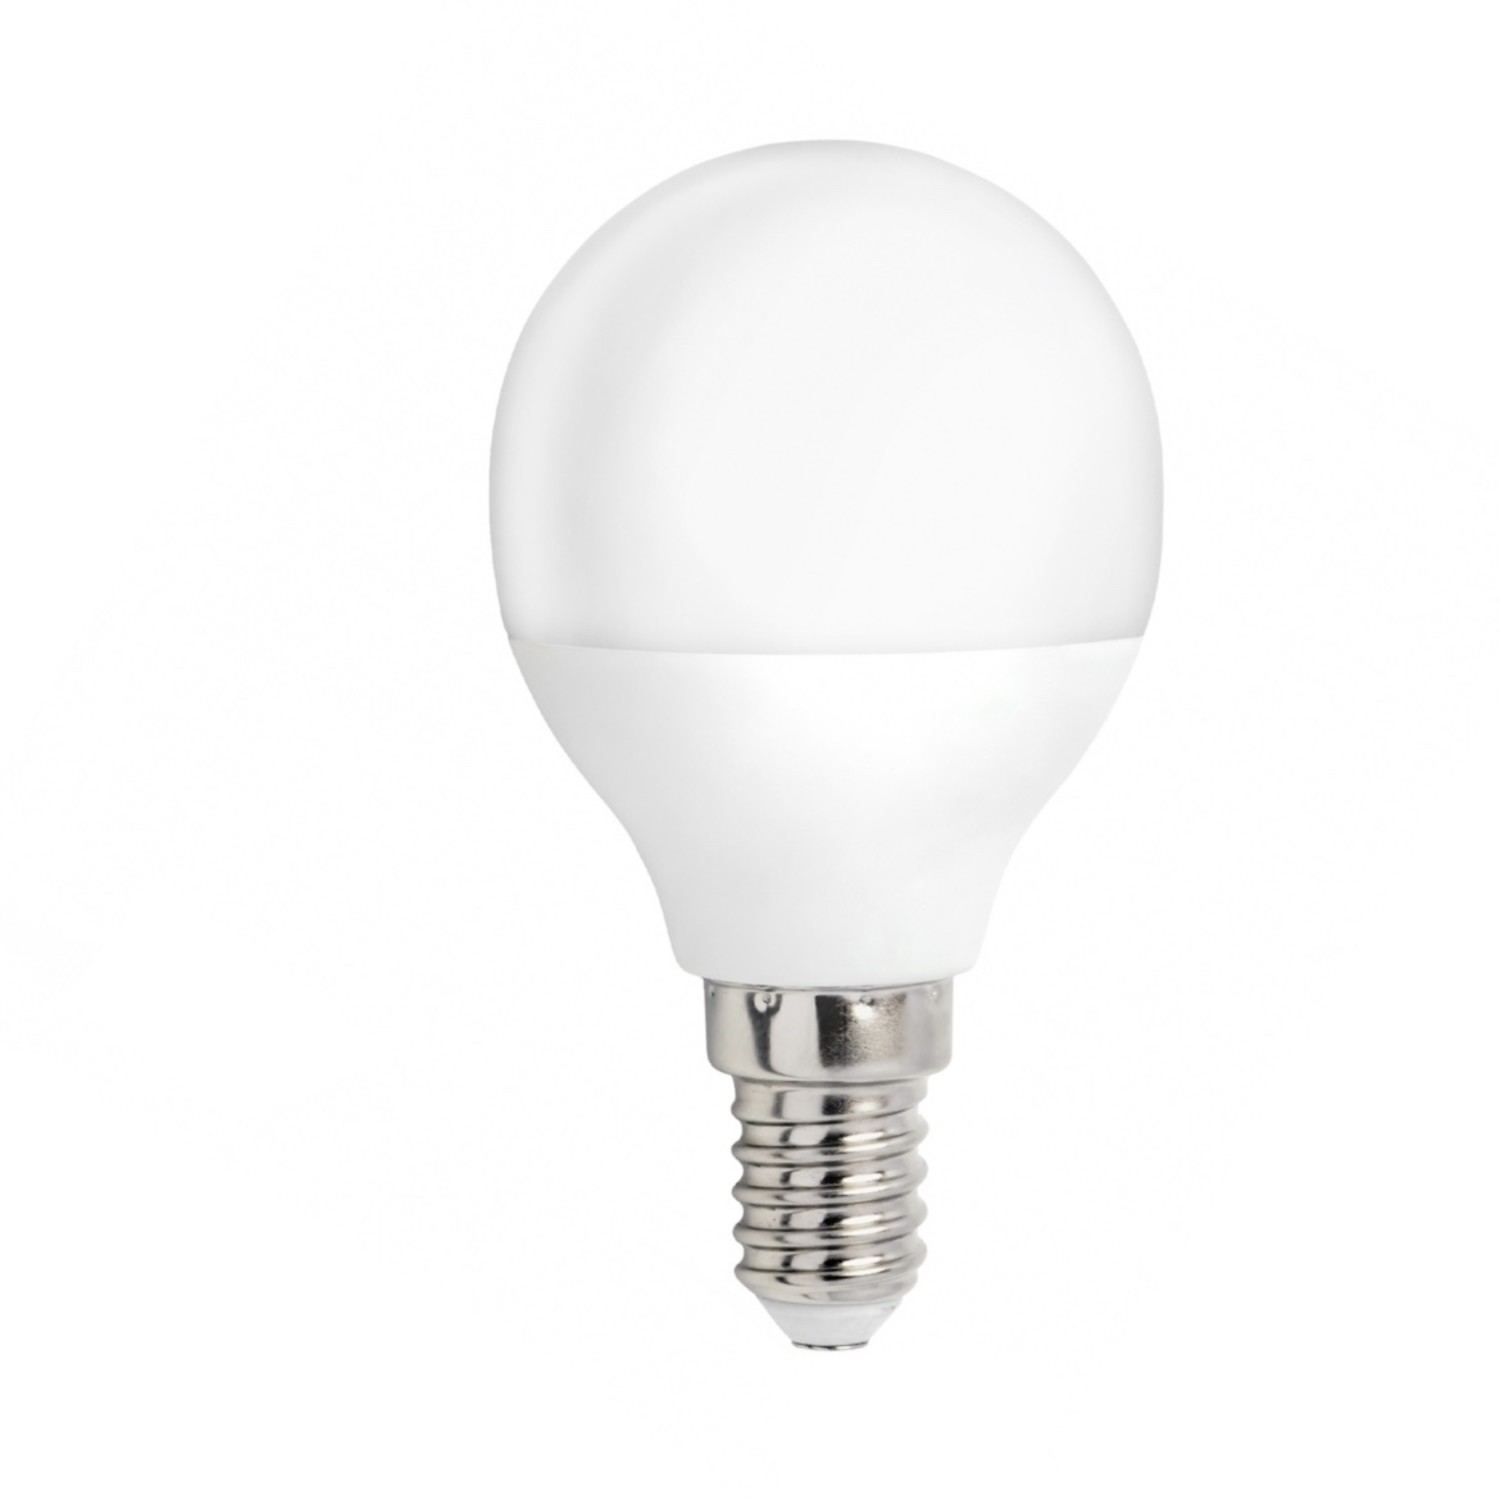 Viool Slapen Rusteloosheid LED lamp - E14 fitting - 4W vervangt 40W - Daglicht wit 6400K -  Ledlichtdiscounter.nl